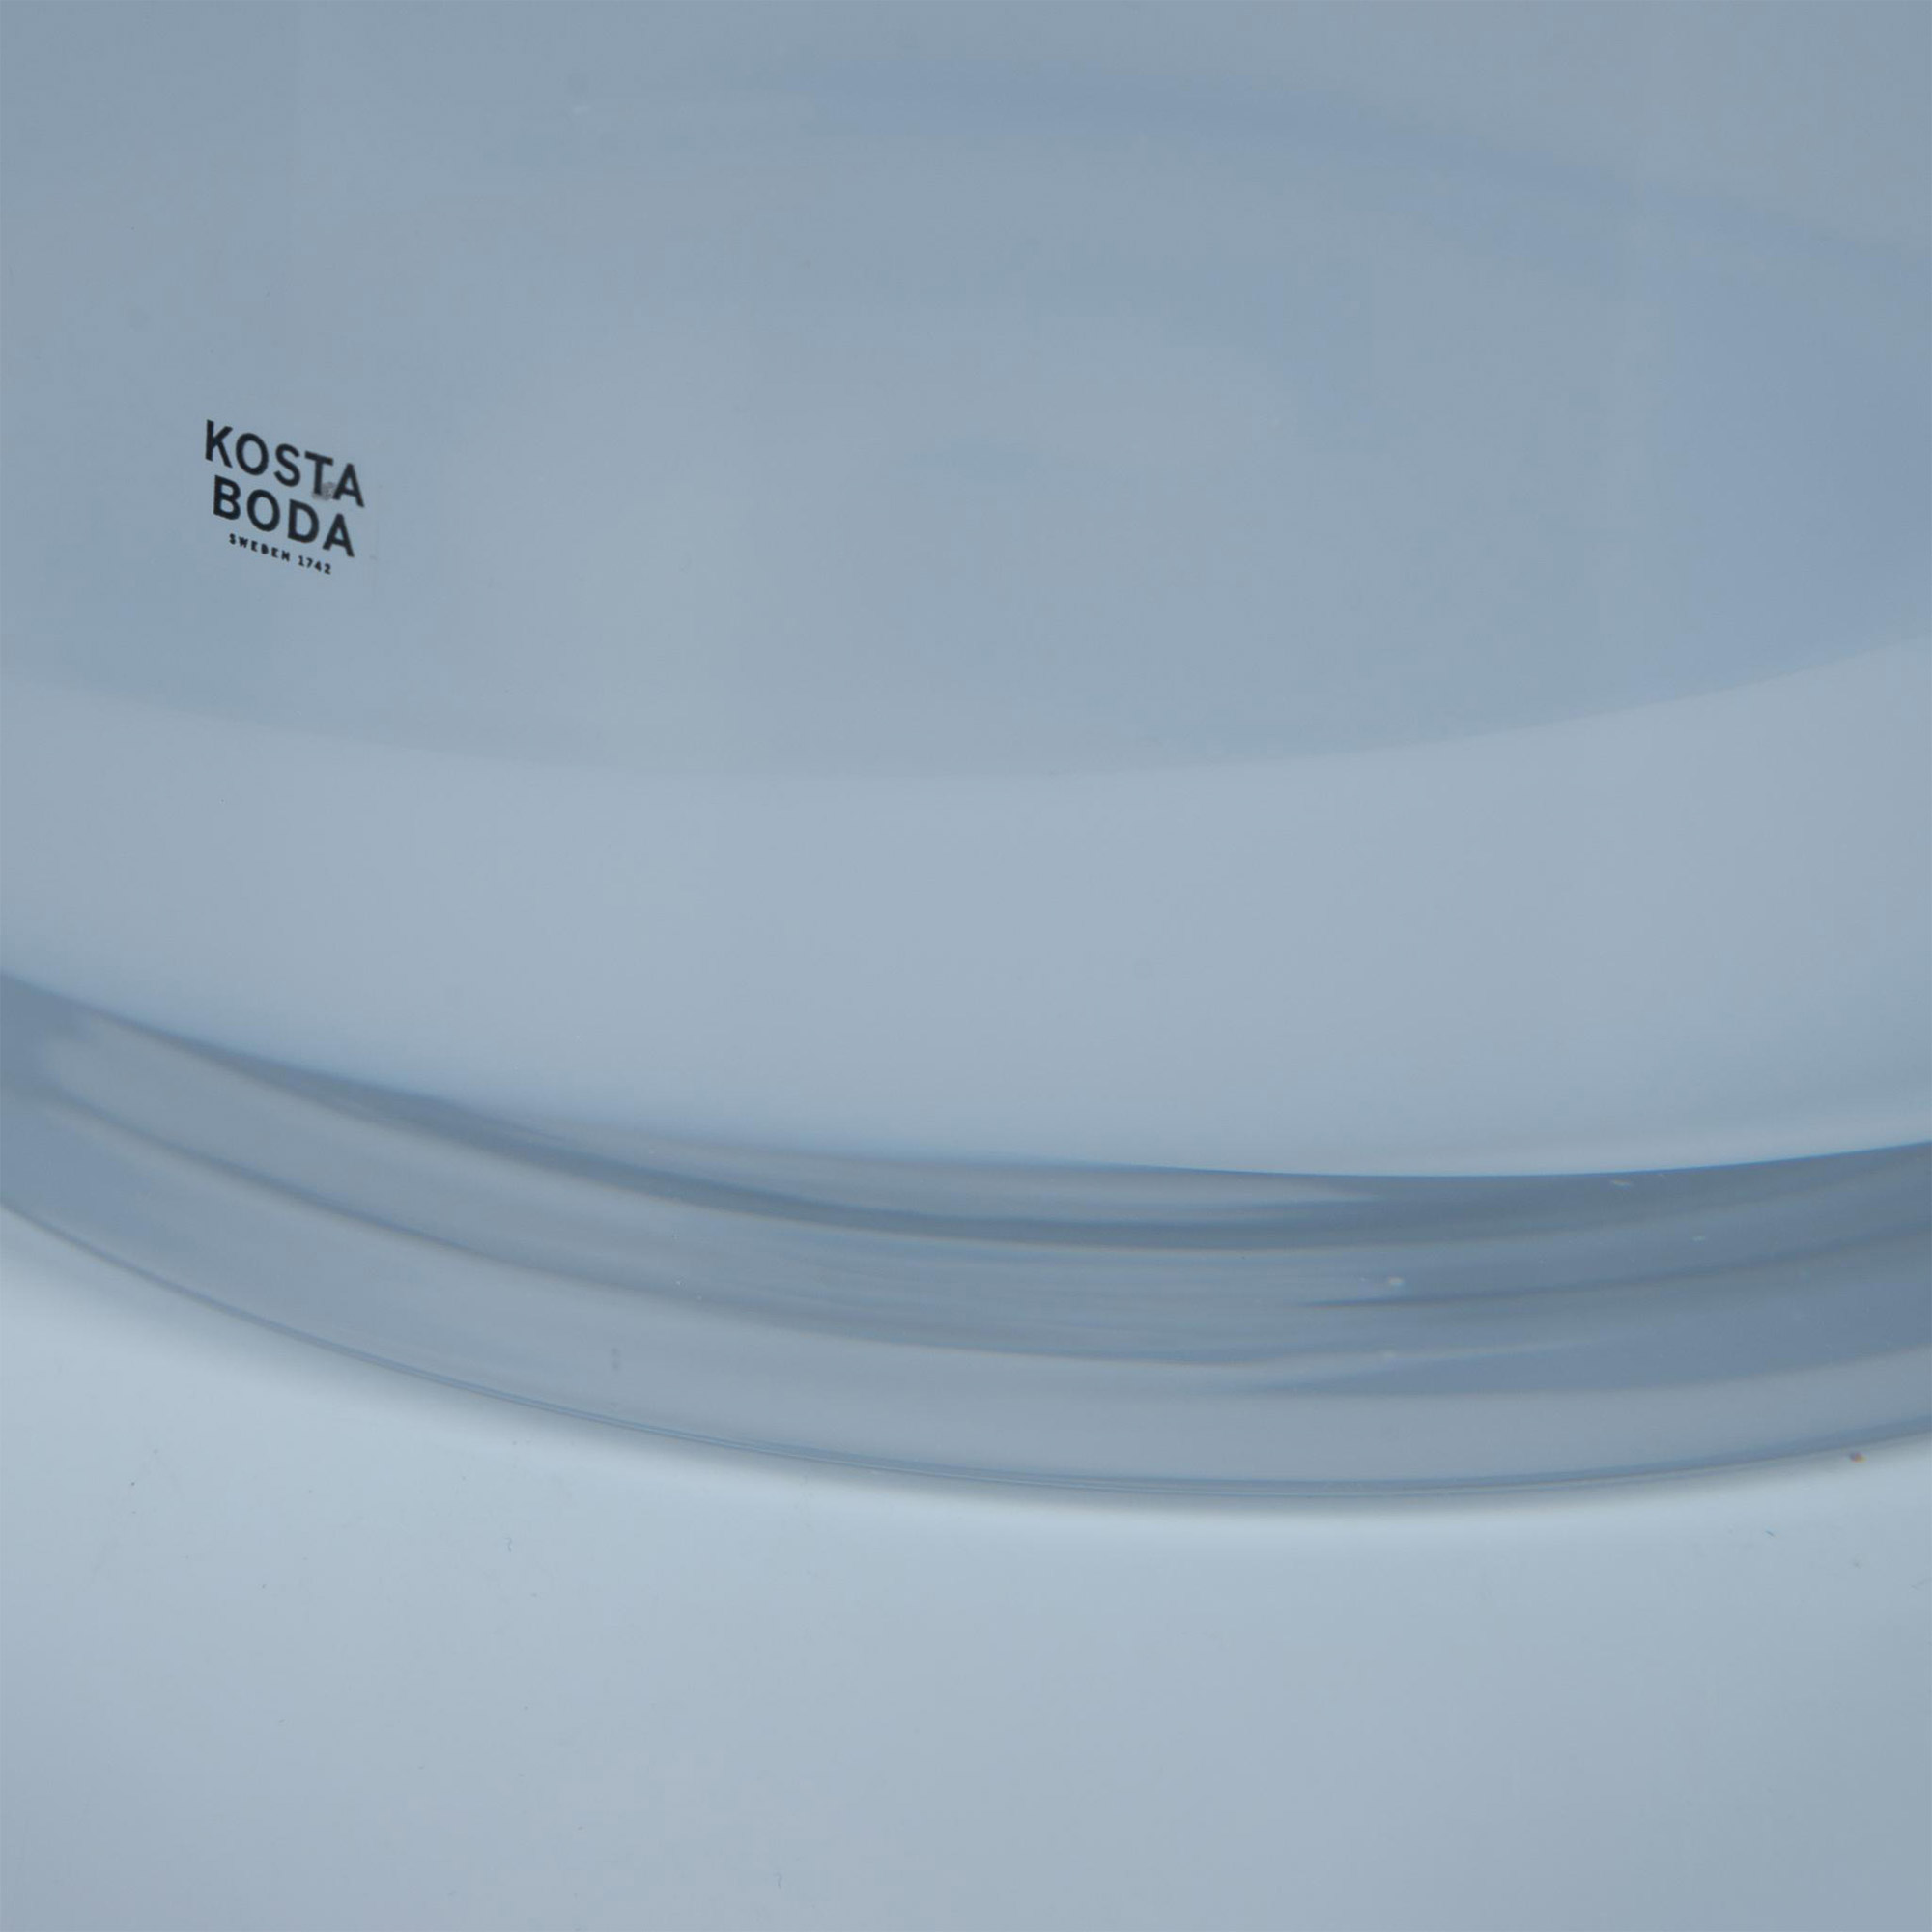 Kosta Boda Art Glass Twist White Vase, Signed - Image 4 of 7